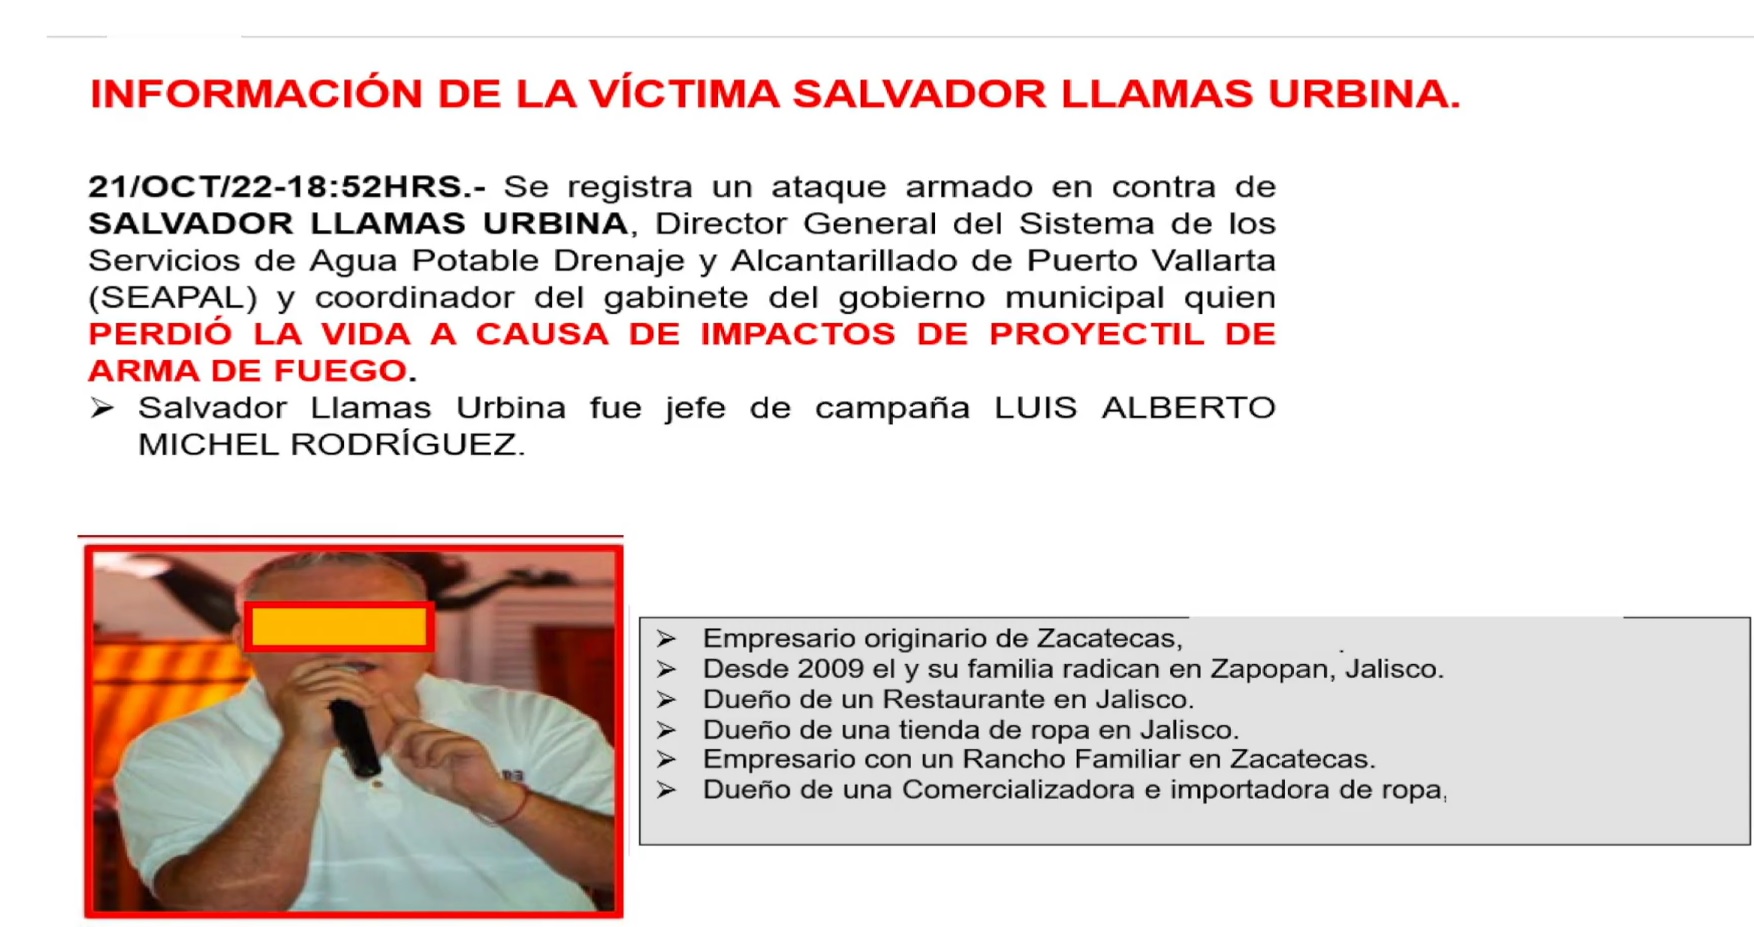 Así como Aristóteles Sandoval, Salvador Llamas Urbina, consejero de Morena, comía con sus asesinos antes de que le dispararan. (Foto: Captura de pantalla).